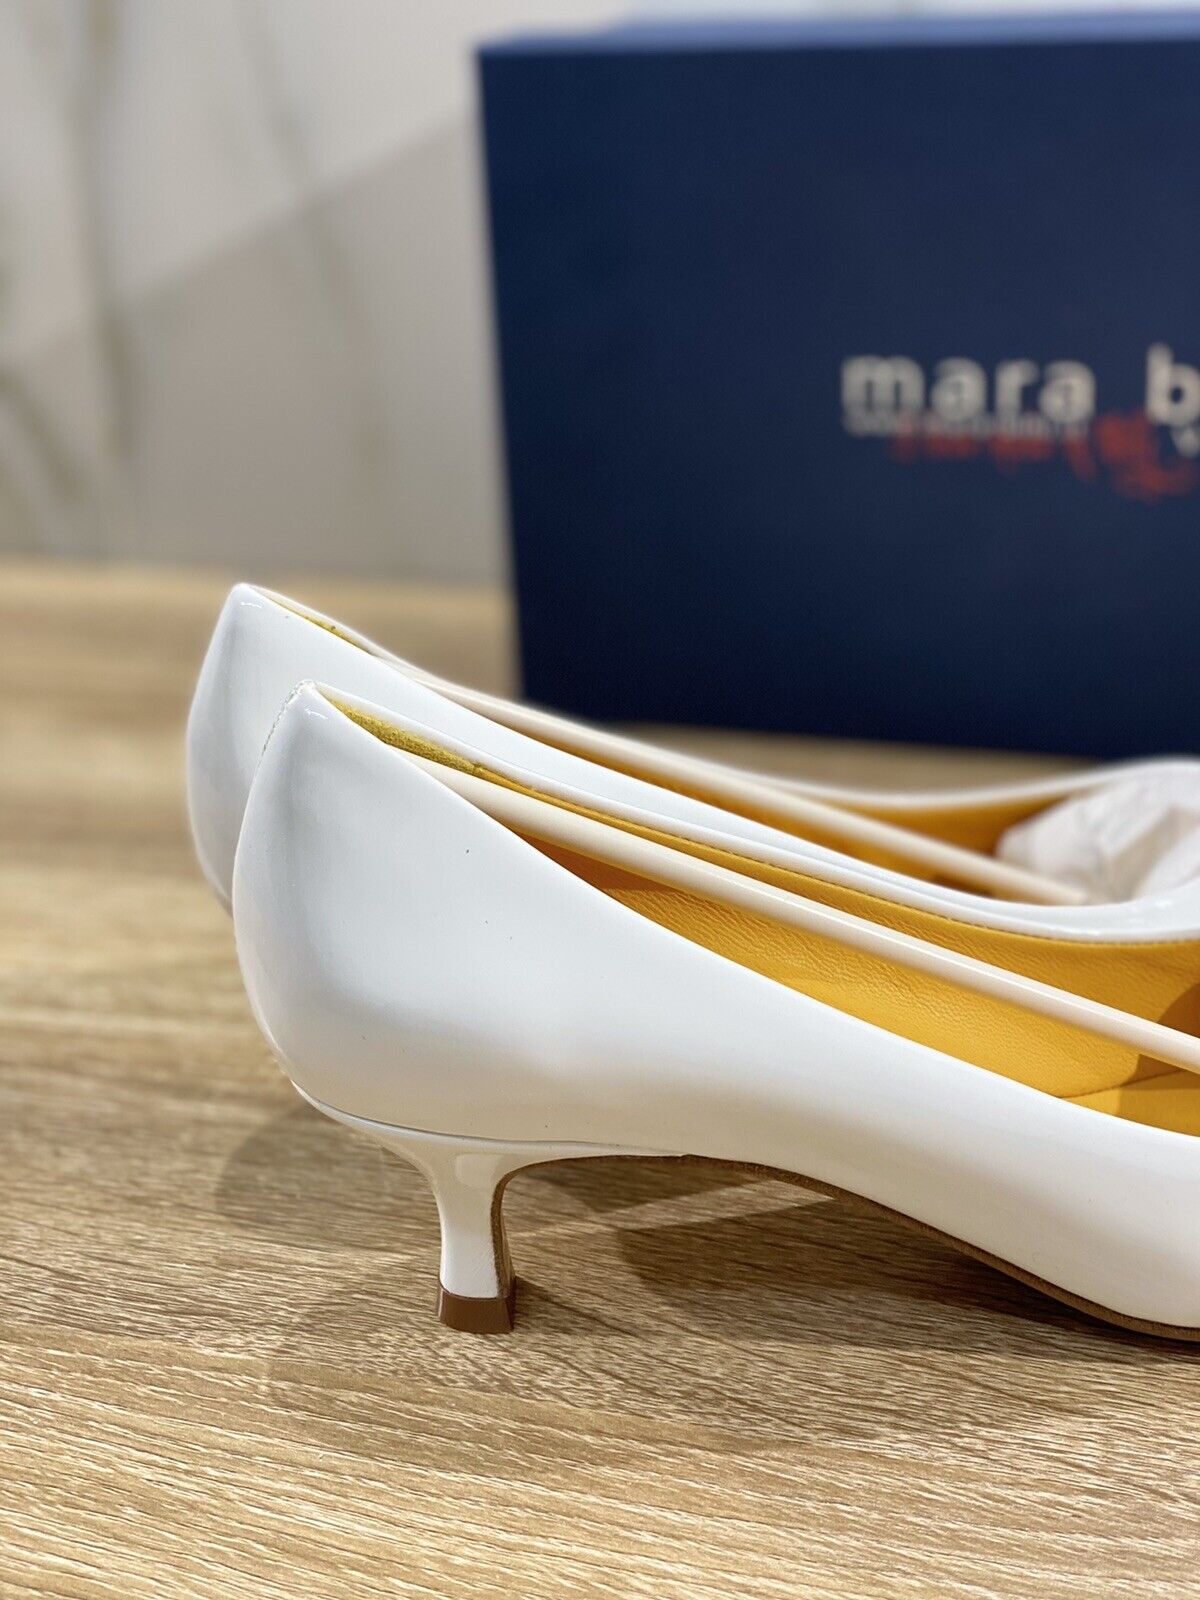 Mara Bini Decolte’ Donna L820 In Naplak Bianco Luxury Handamde In Italy 37.5